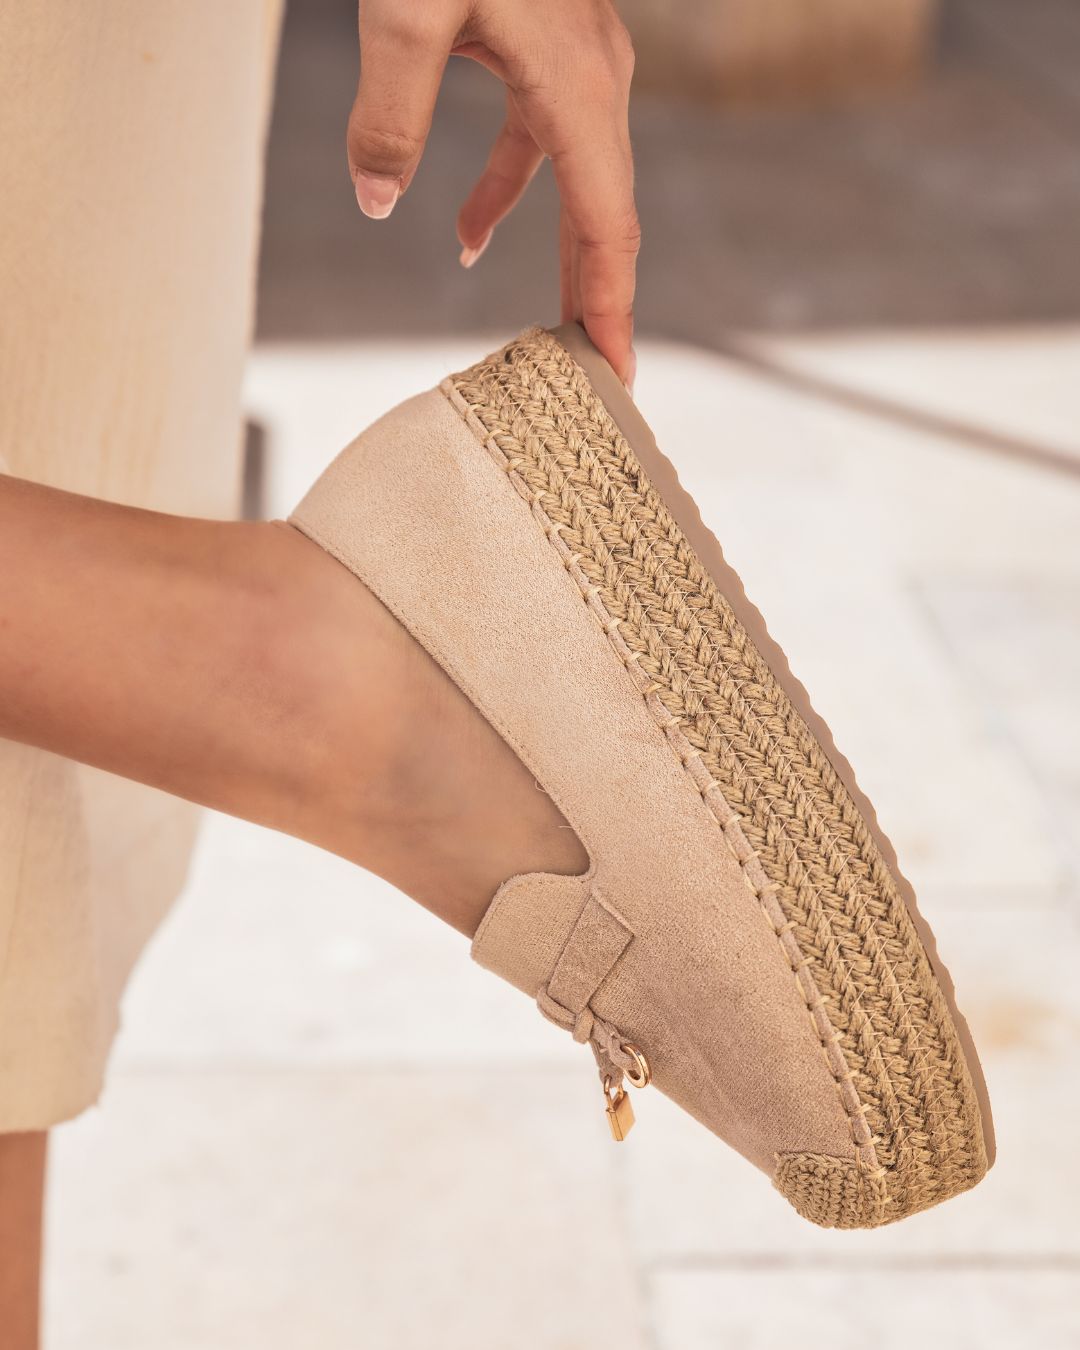 Sandale femme plateforme espadrille beige - Claire - Casualmode.fr